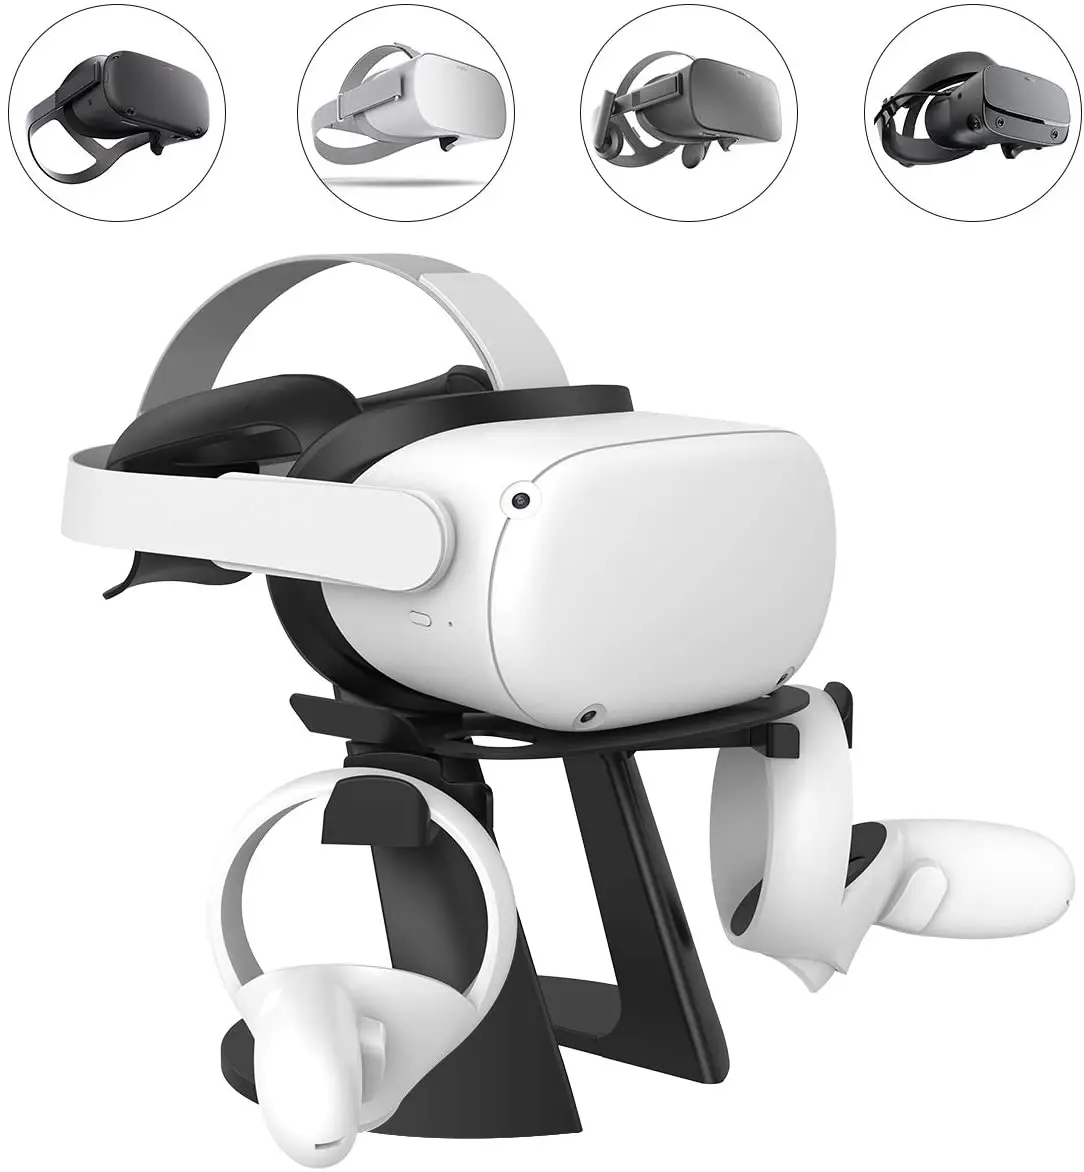 VR Soporte para Oculus Rift S PC VR Gaming Headset y Oculus Quest Todo en uno VR Gaming Headset Holder Display Controller Mount Station 